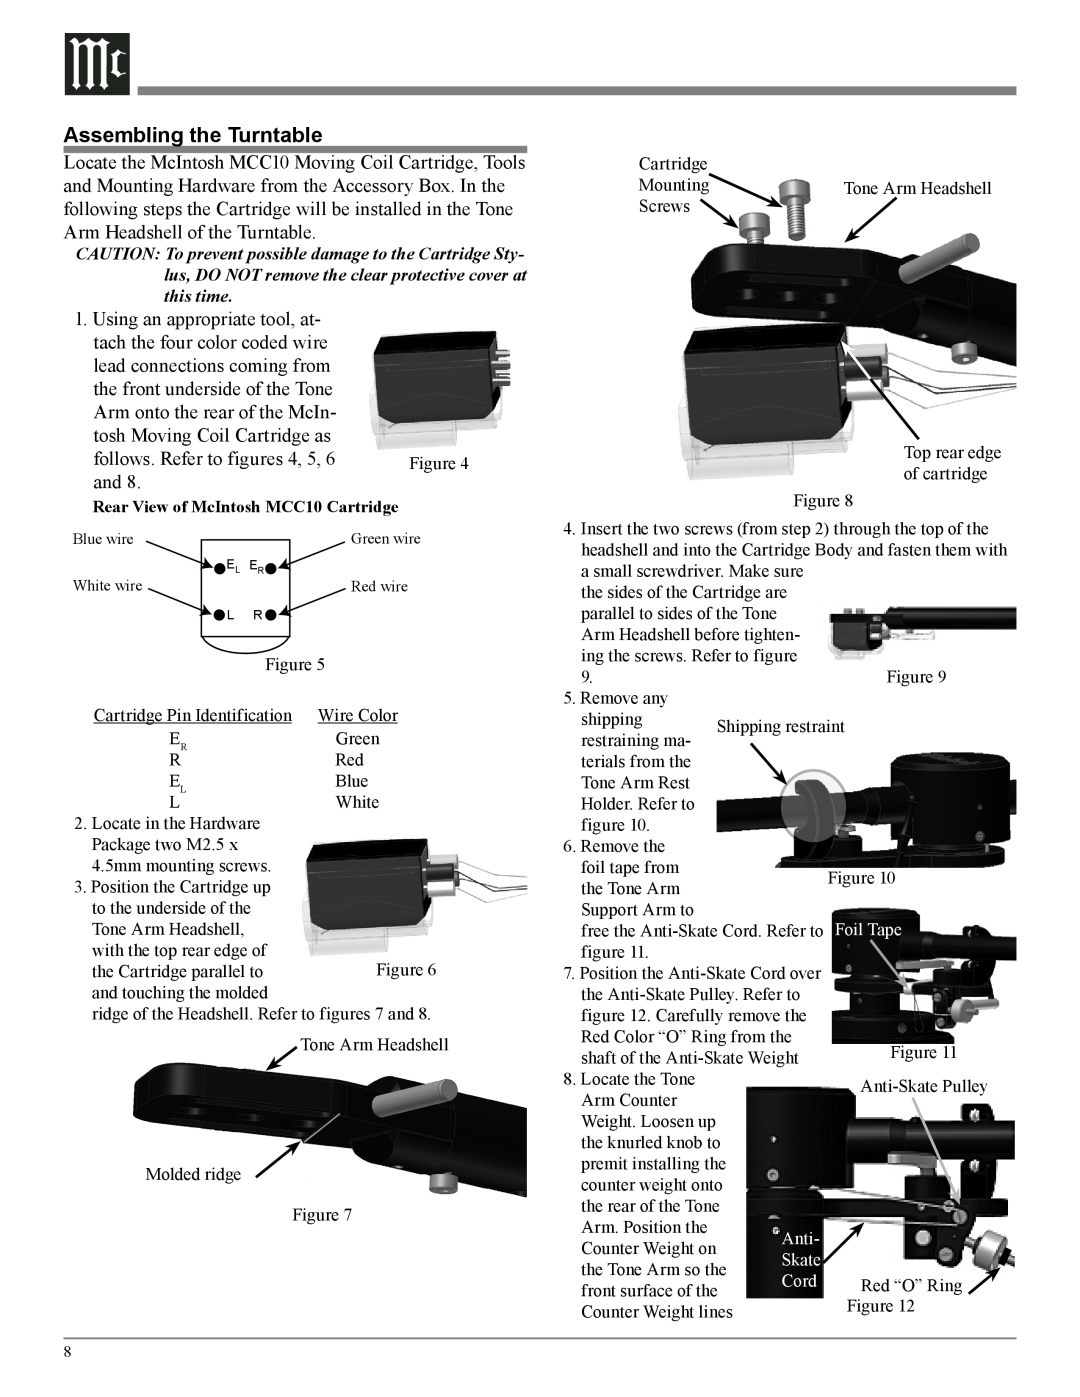 McIntosh MT10 owner manual Assembling the Turntable, Rear View of McIntosh MCC10 Cartridge, Anti, Skate, Cord 